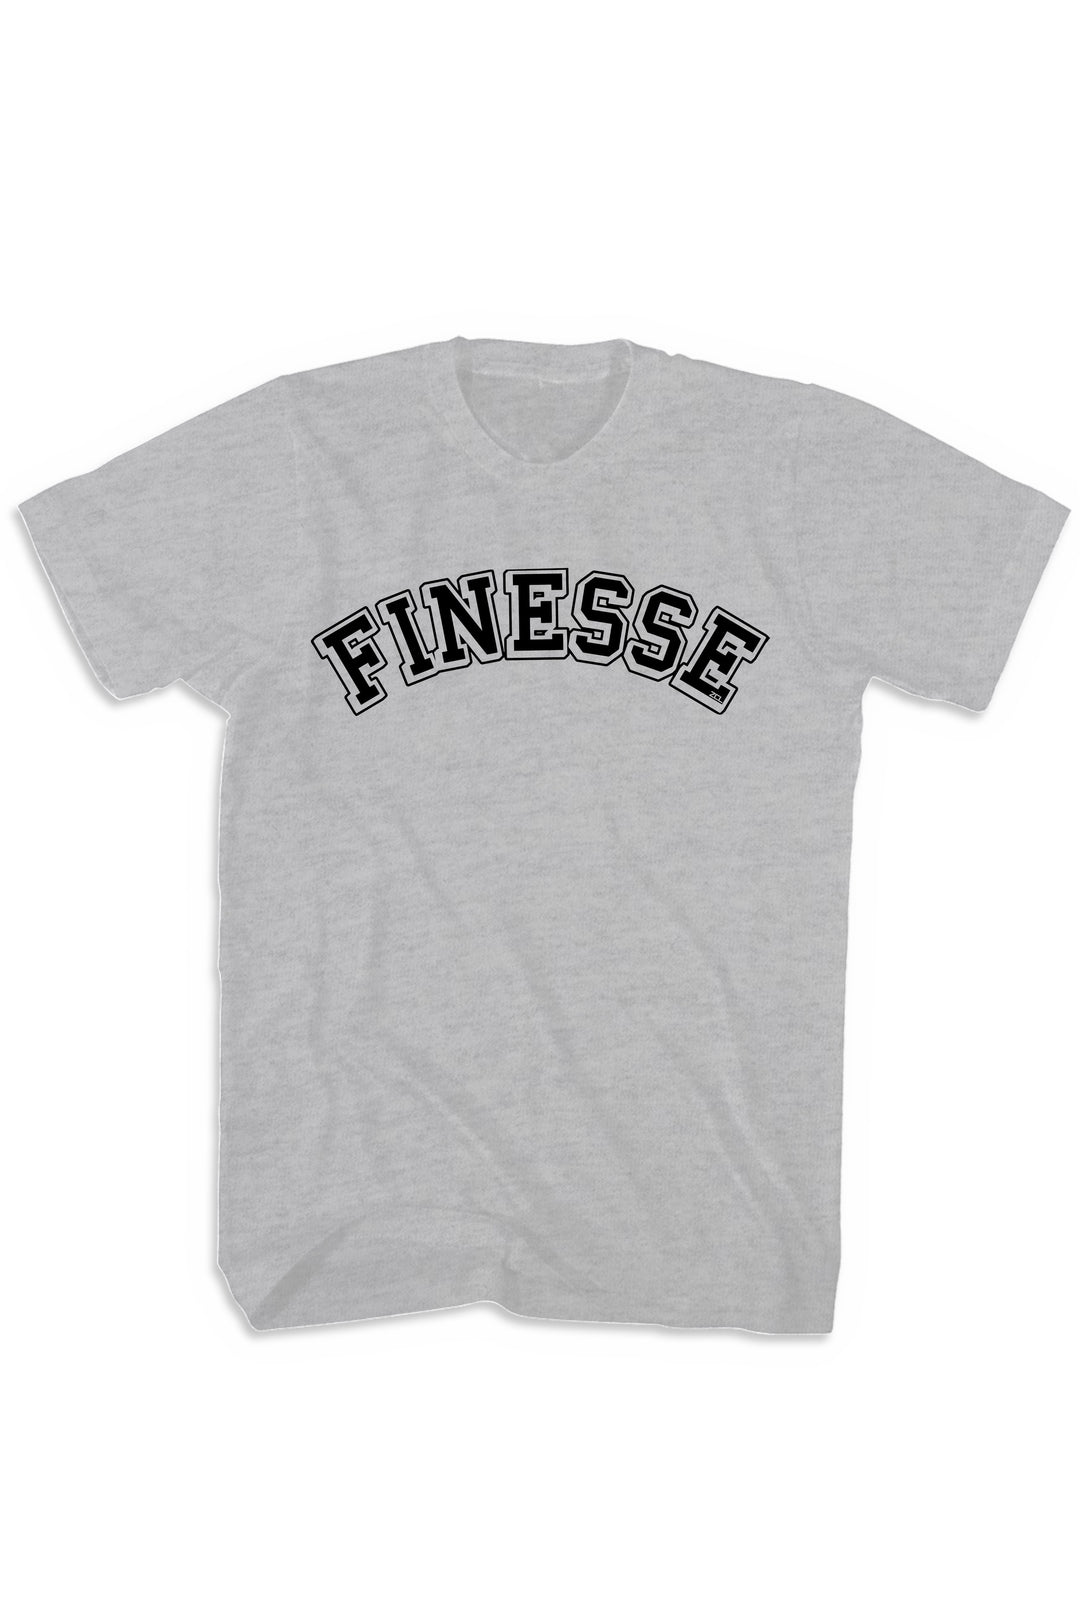 Finesse Tee (Black Logo) - Zamage